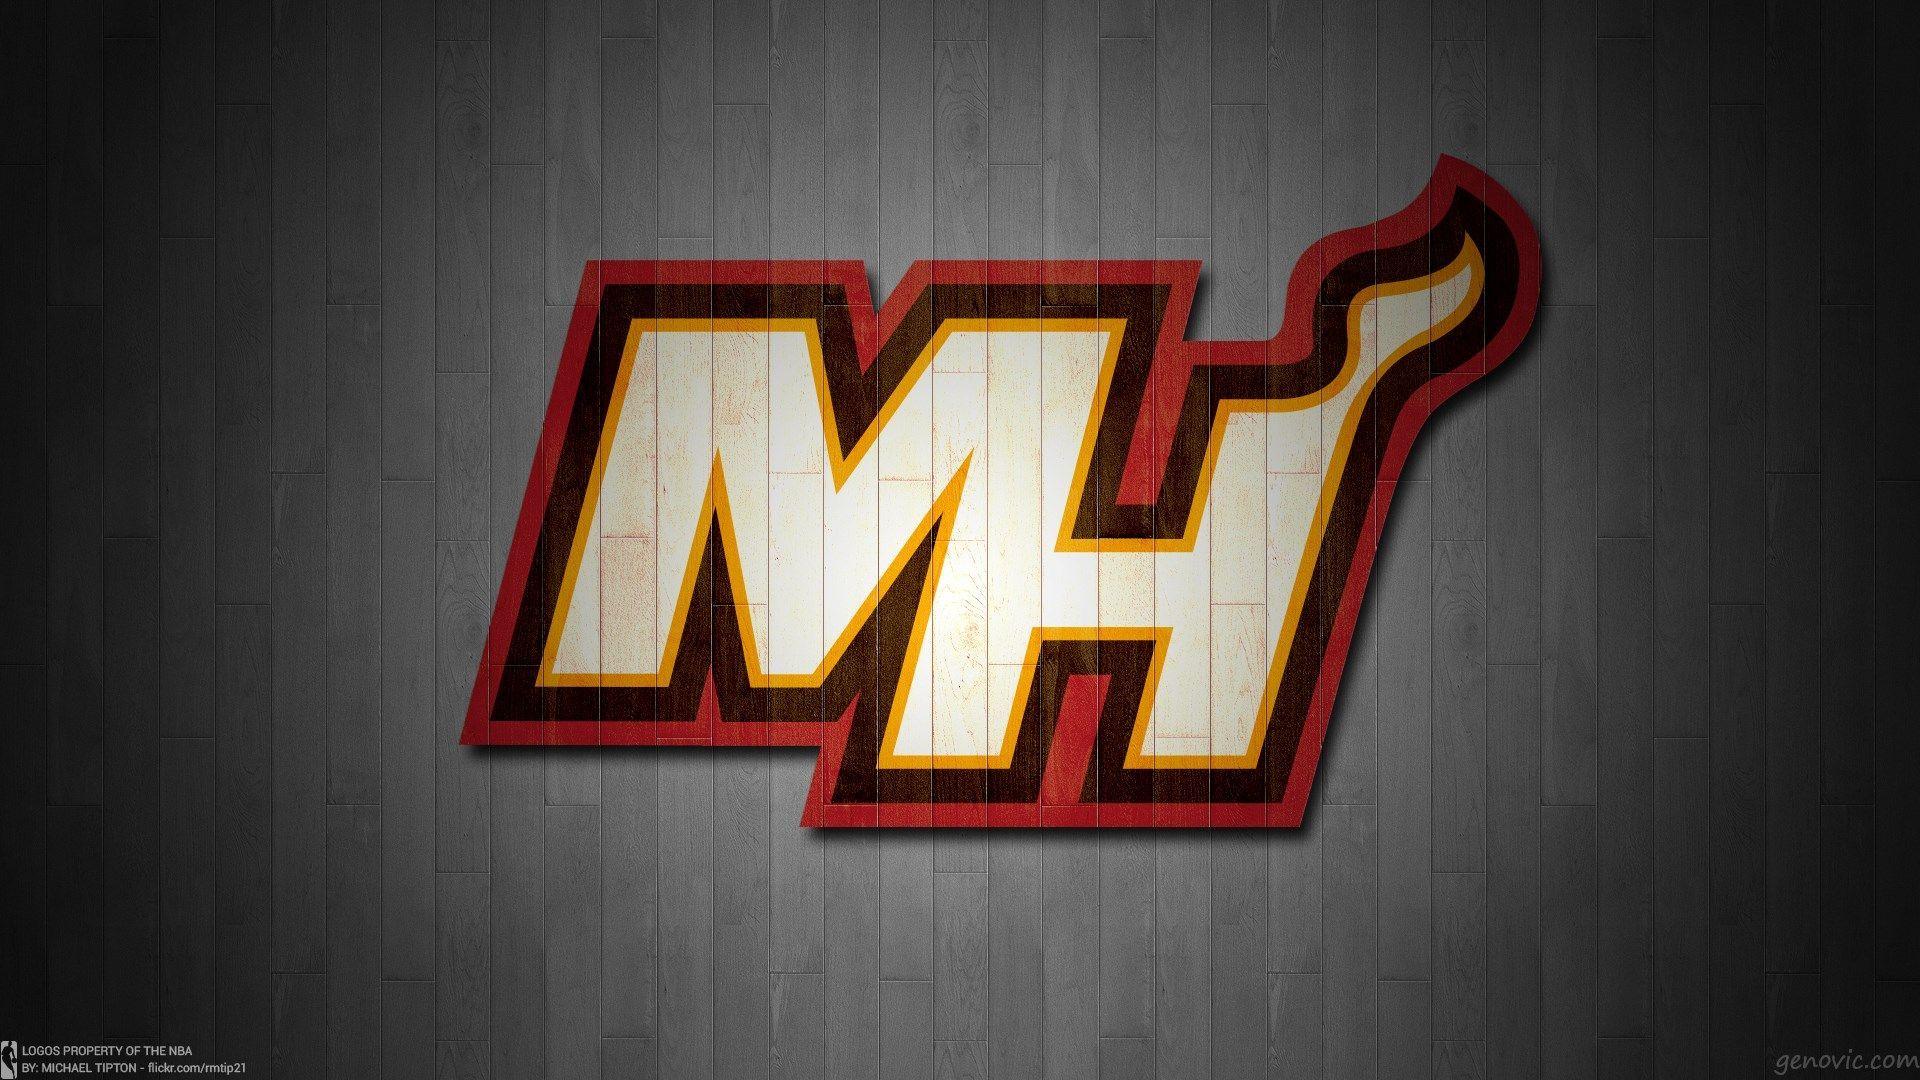 Miami Heat HD Logo Wallpaper